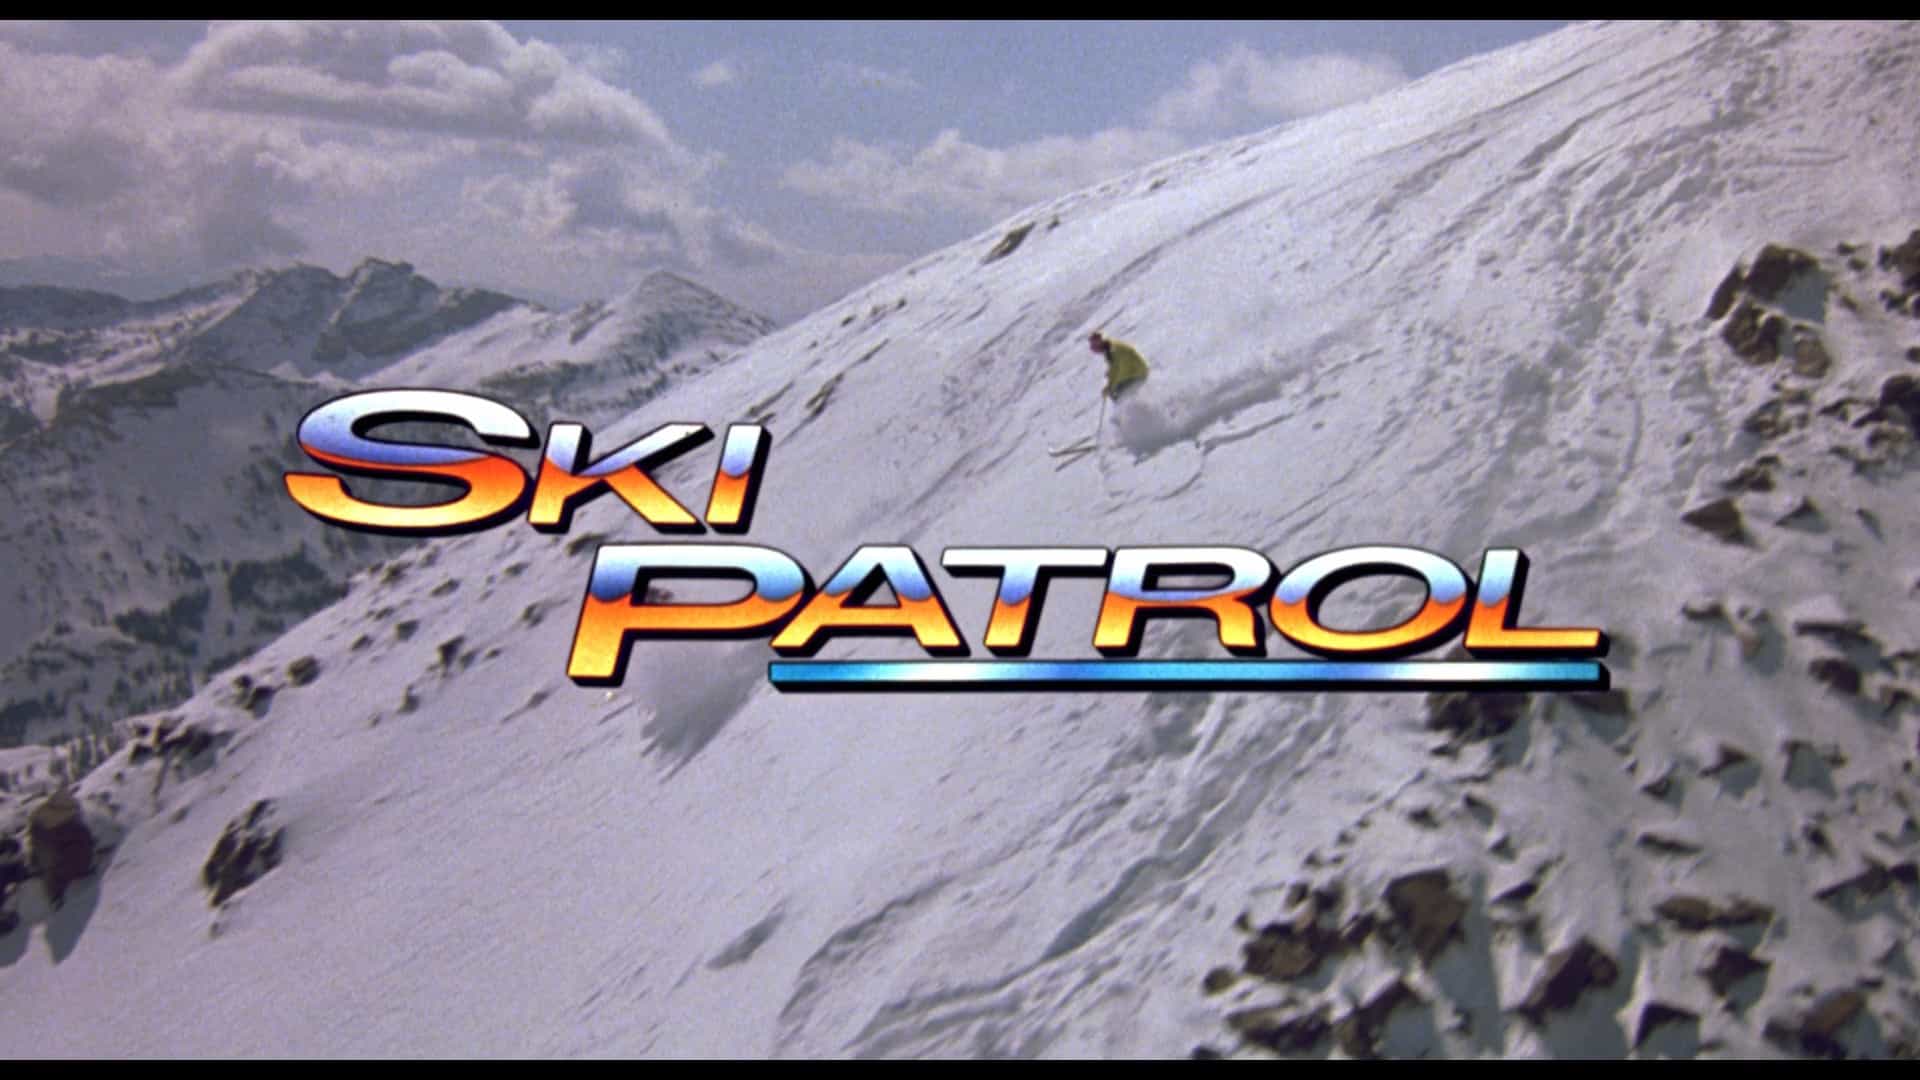 Ski Patrol (1990) [MVD Rewind Collection Blu-ray review] 22